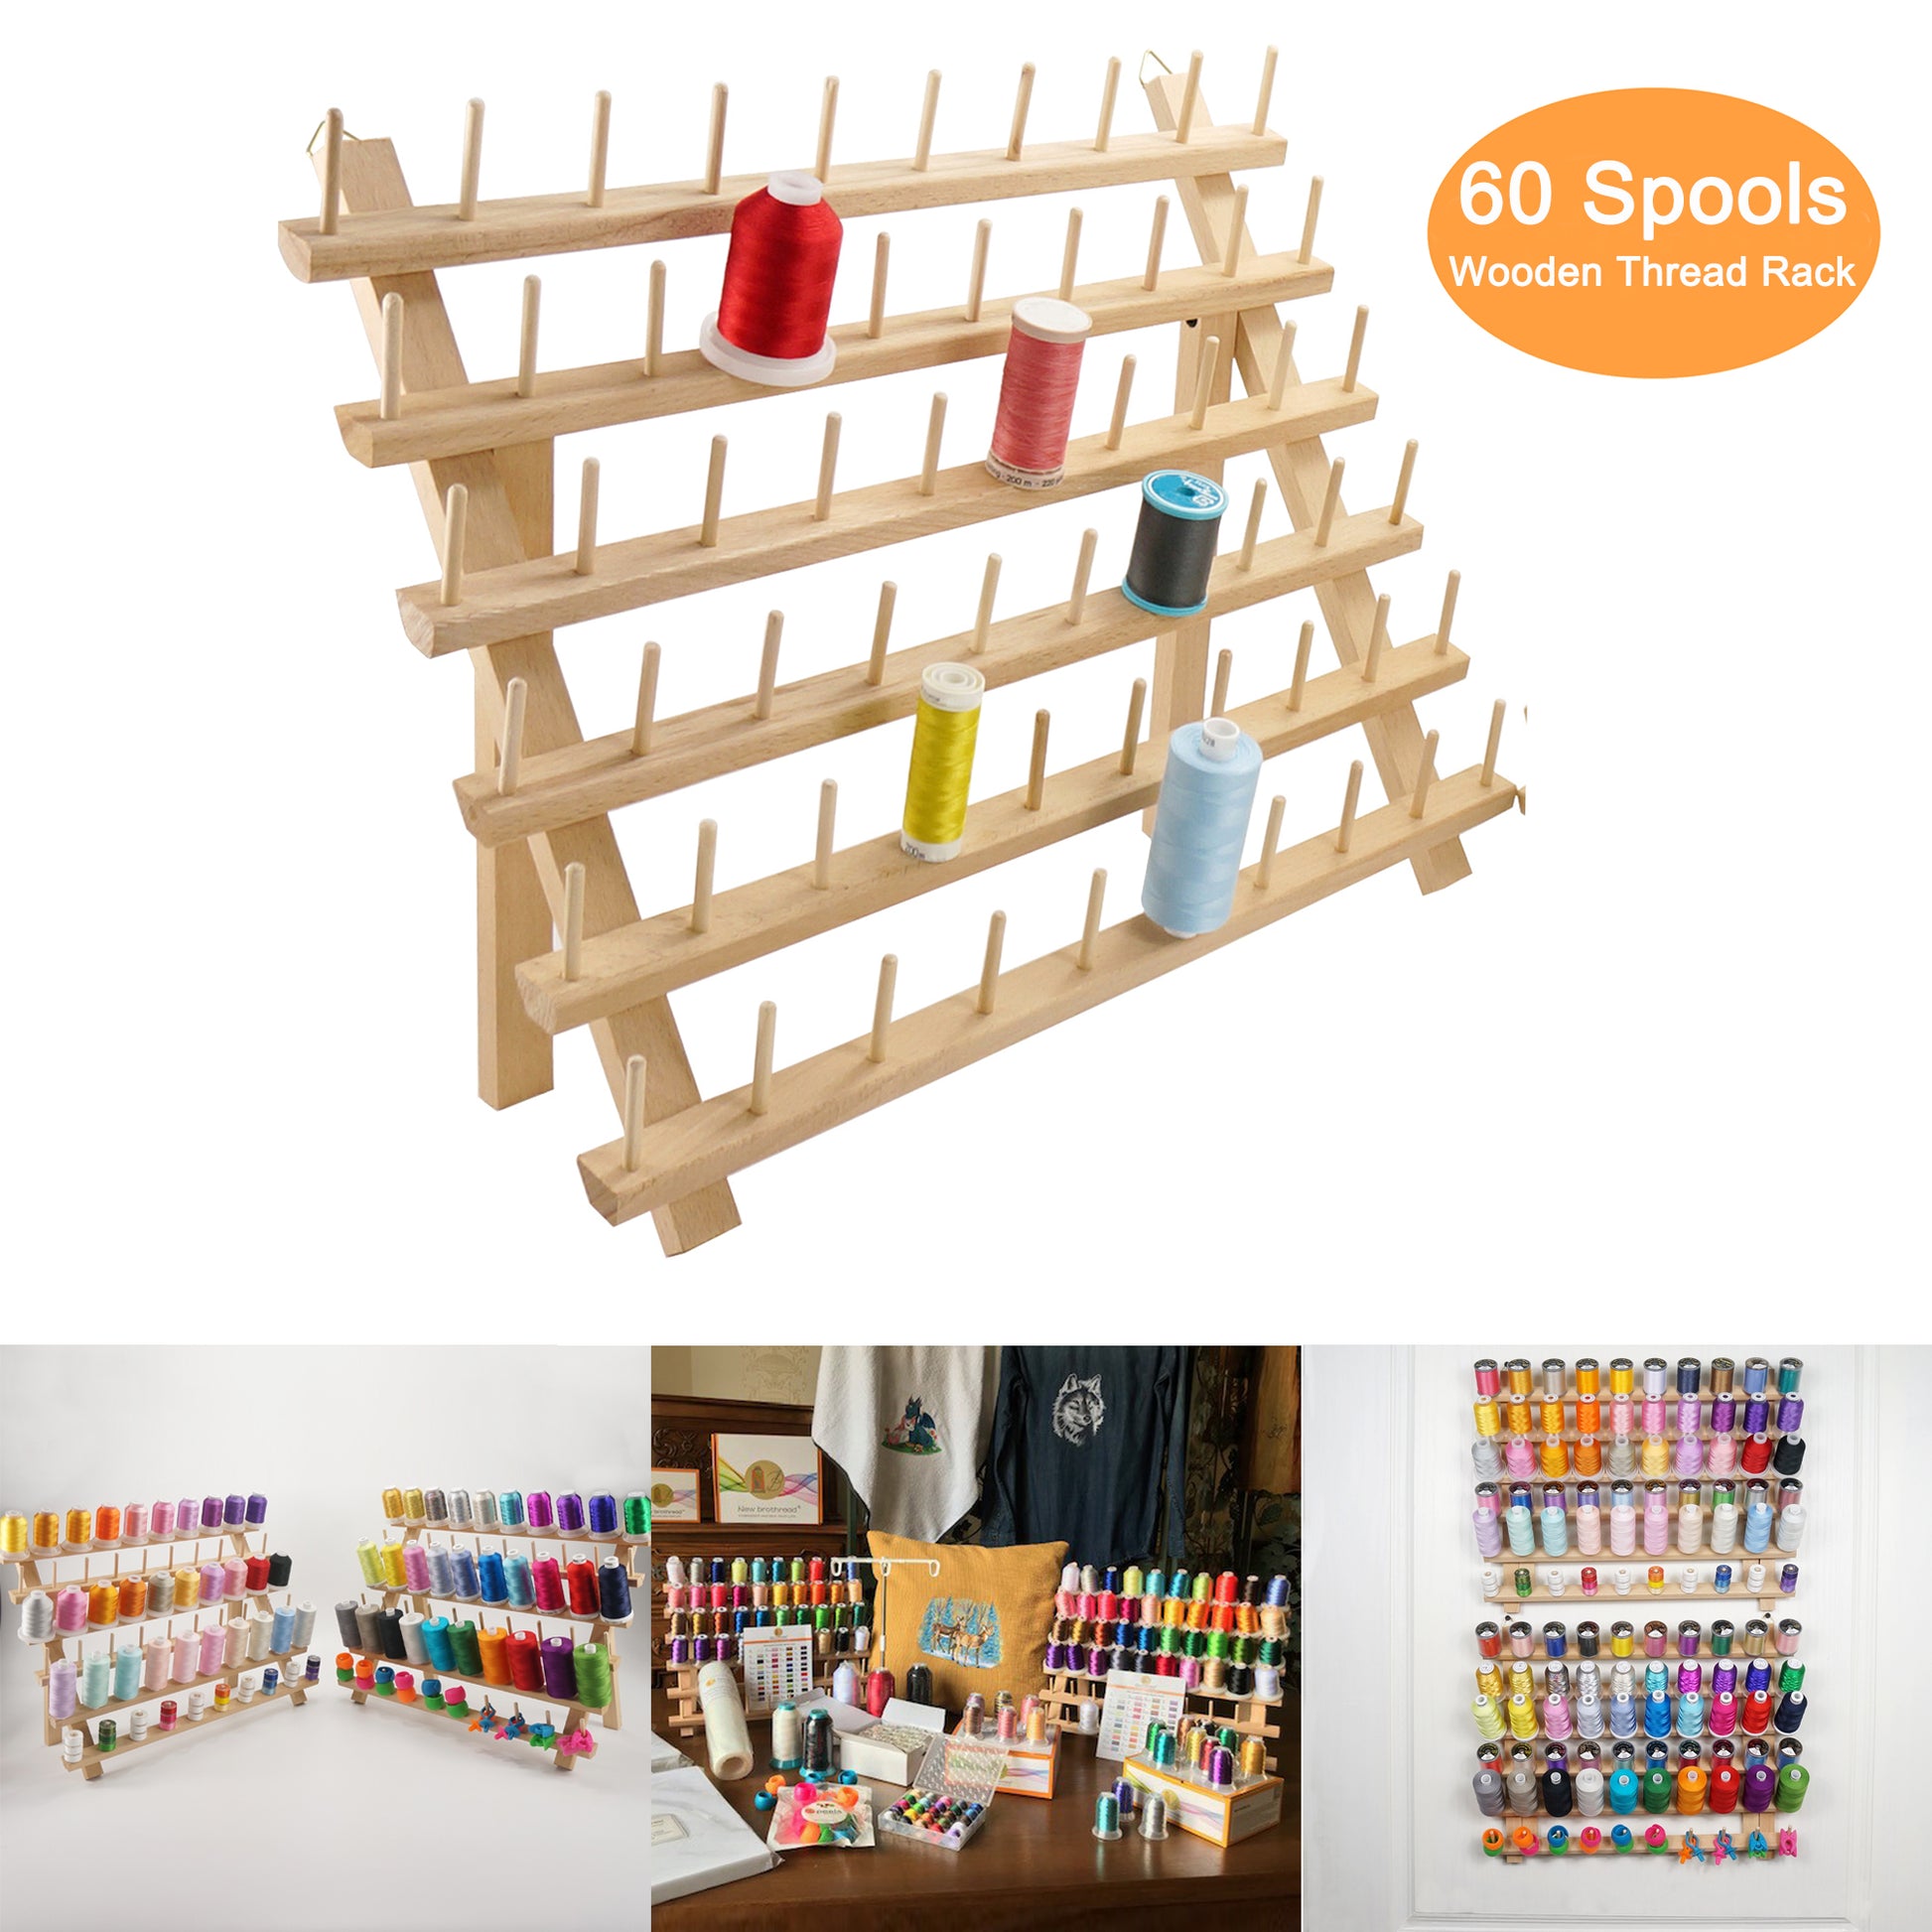 New Brothread 60 Spools Wooden Thread Rack / Thread Holder Organizer w –  New brothread